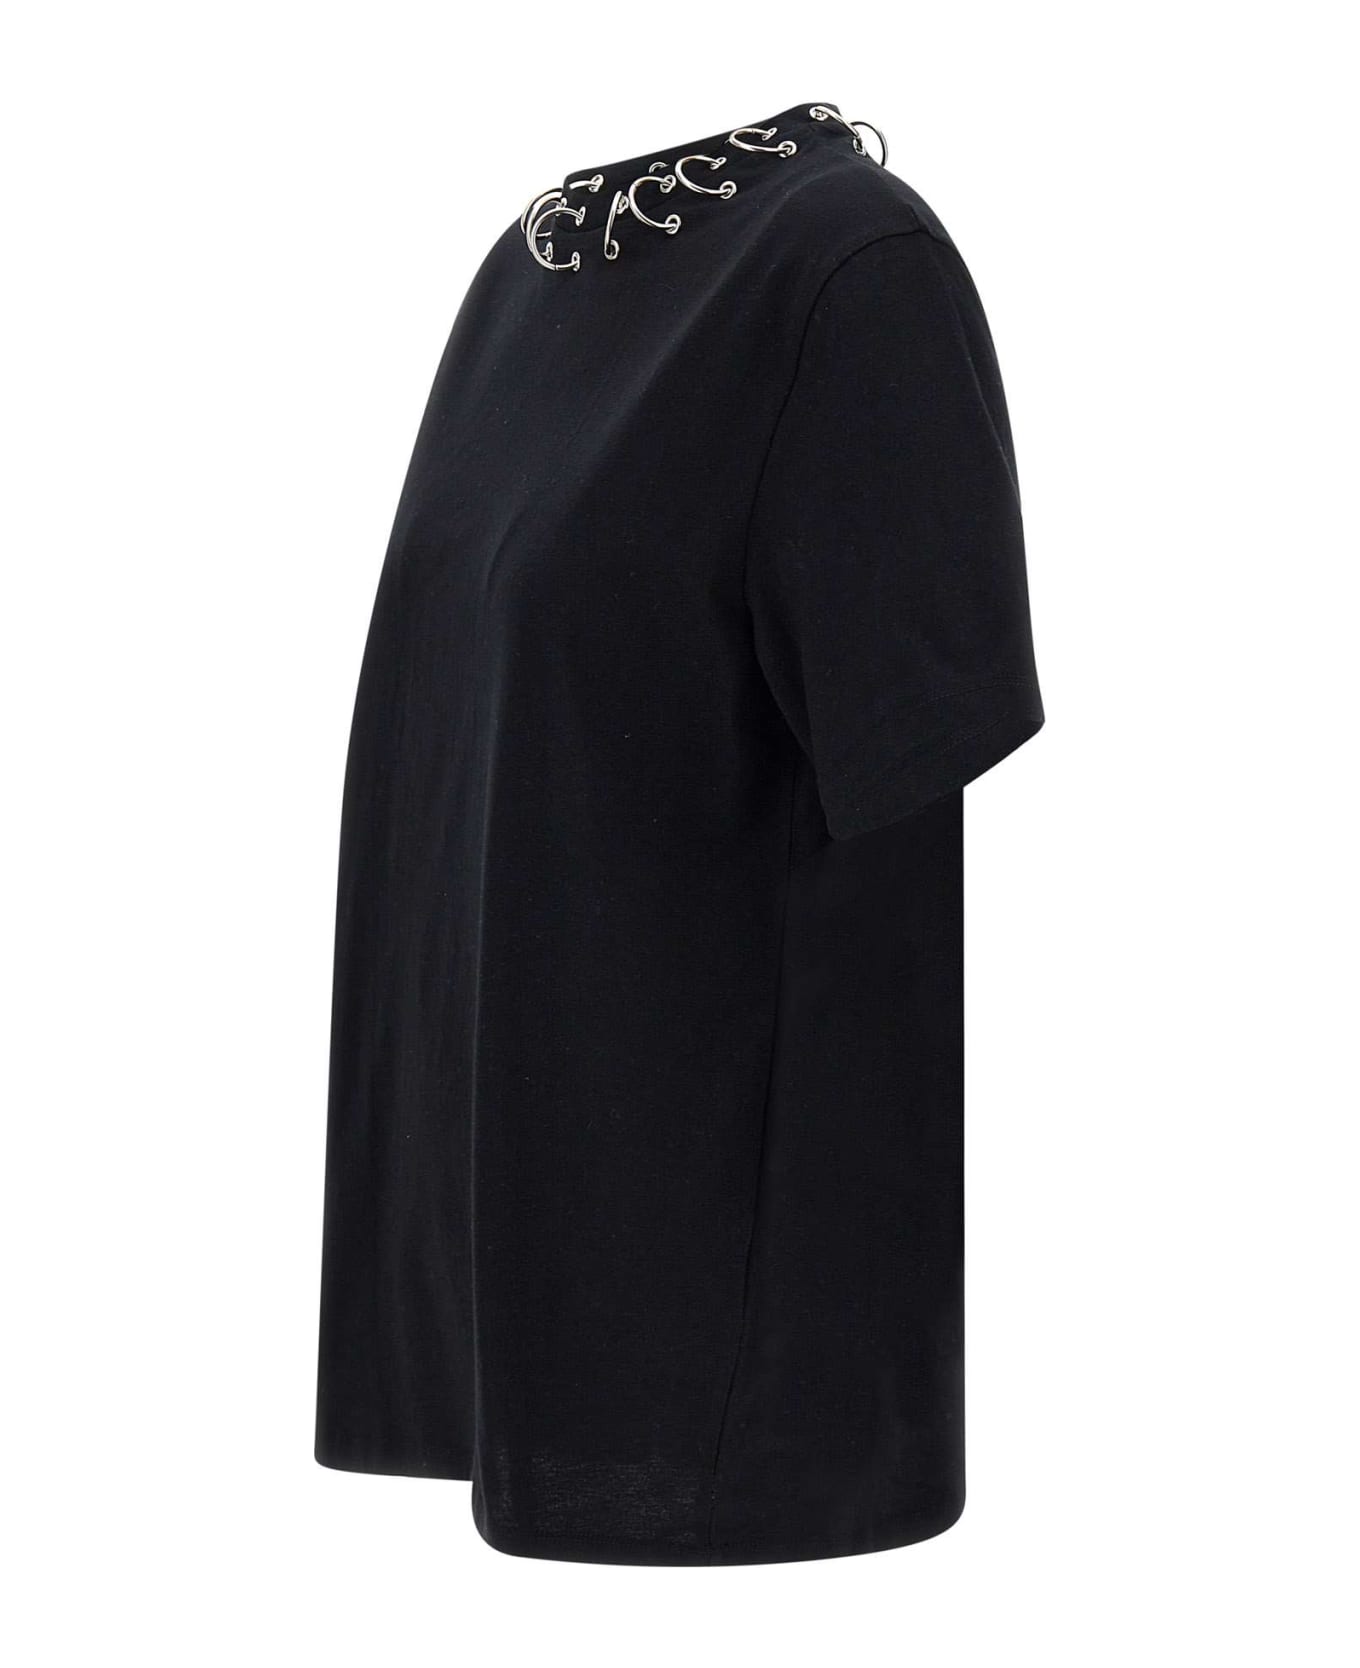 Rotate by Birger Christensen 'oversize Ring' Cotton T-shirt - Black Tシャツ